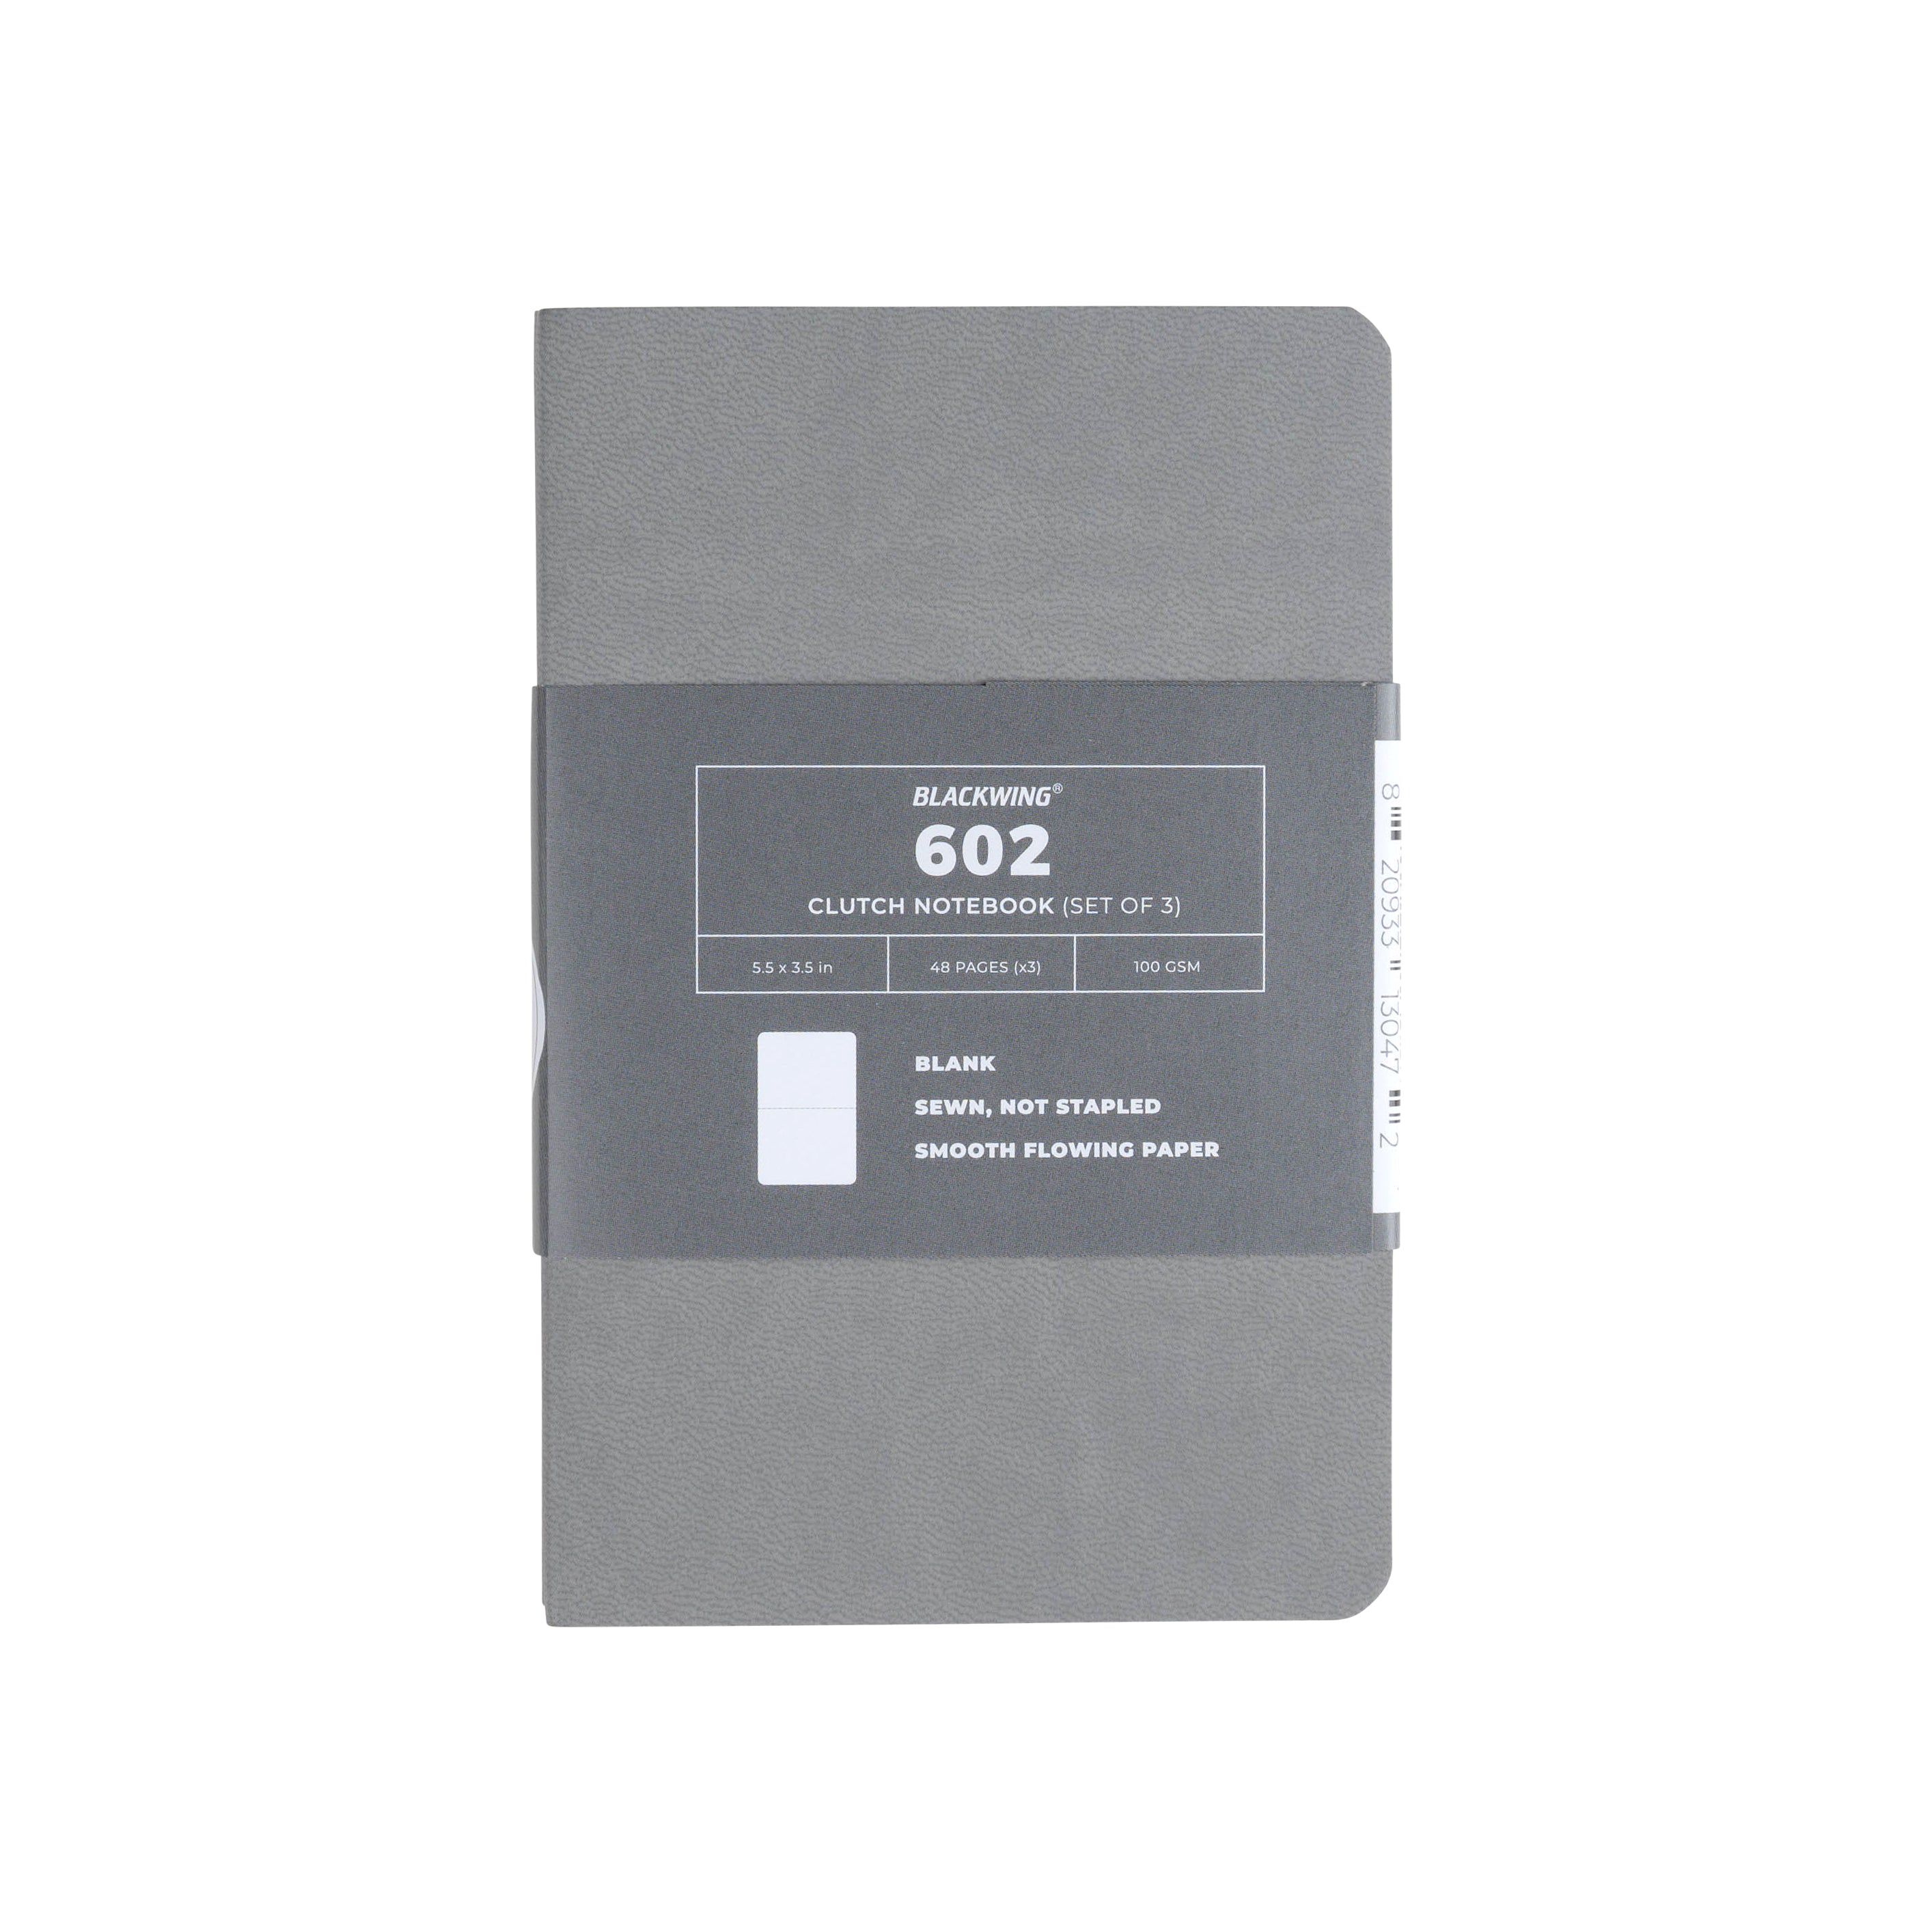 Blackwing 602 Clutch Notebook - Blank Paper